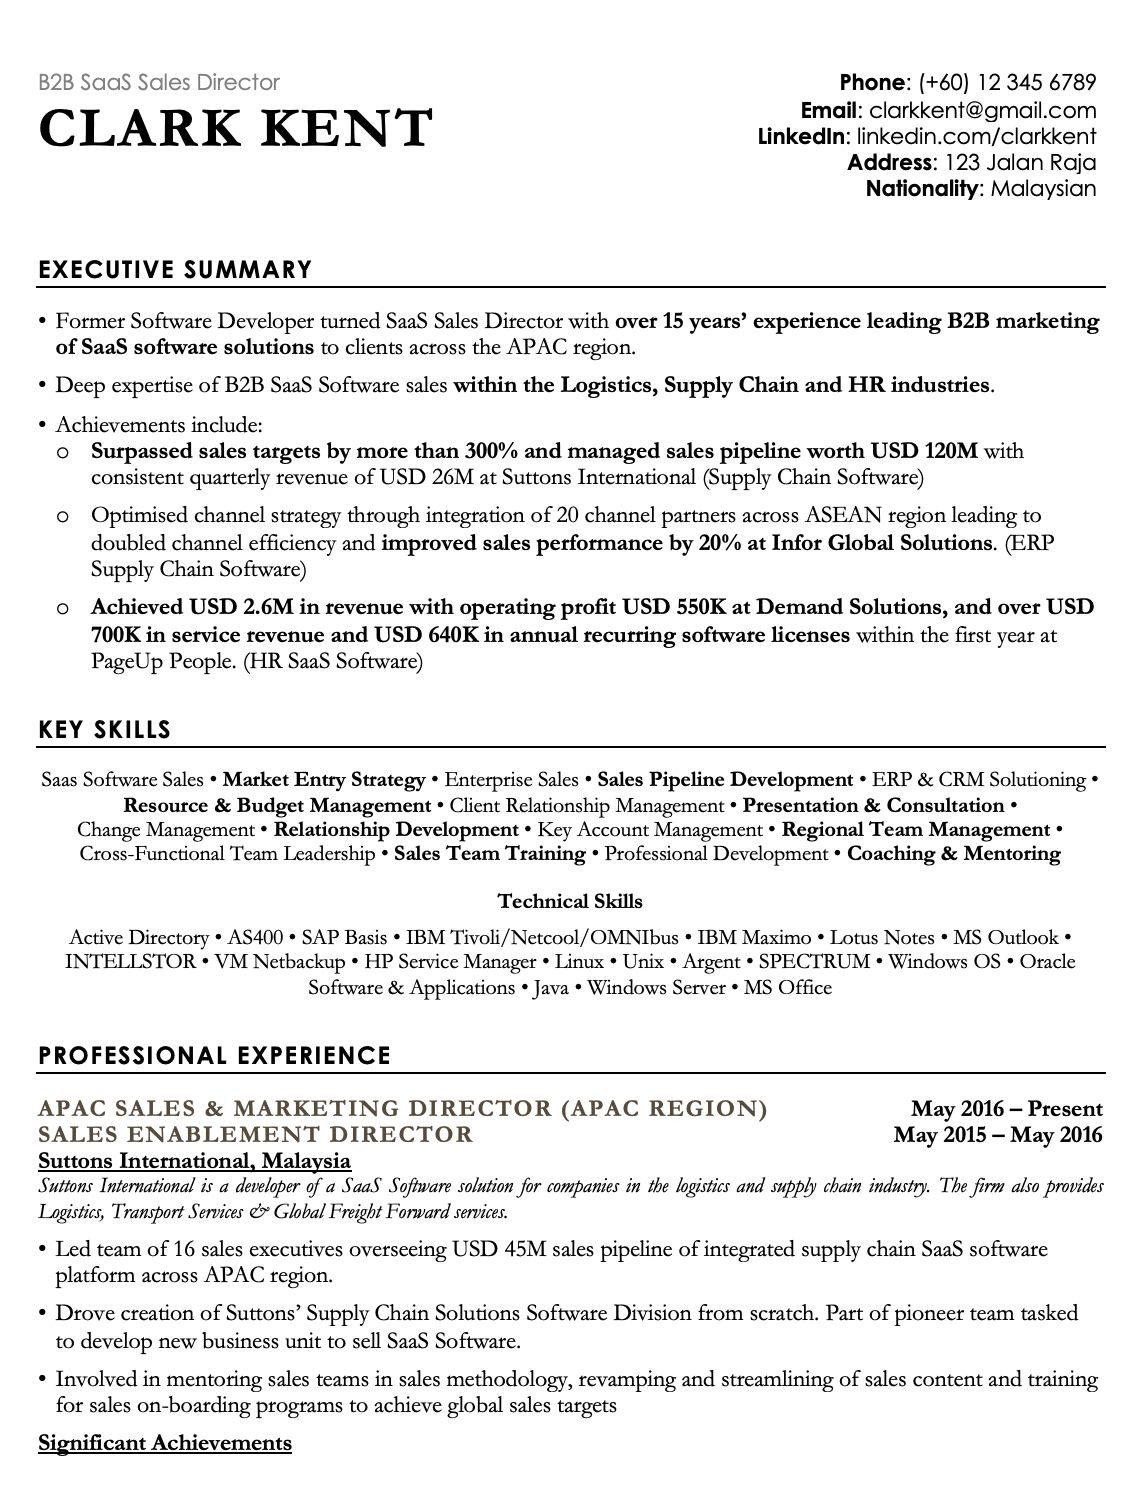 The Best Resume Sample In Malaysia 10lancarrezekiq Professional Resume Templates Downloadable Cv Templates